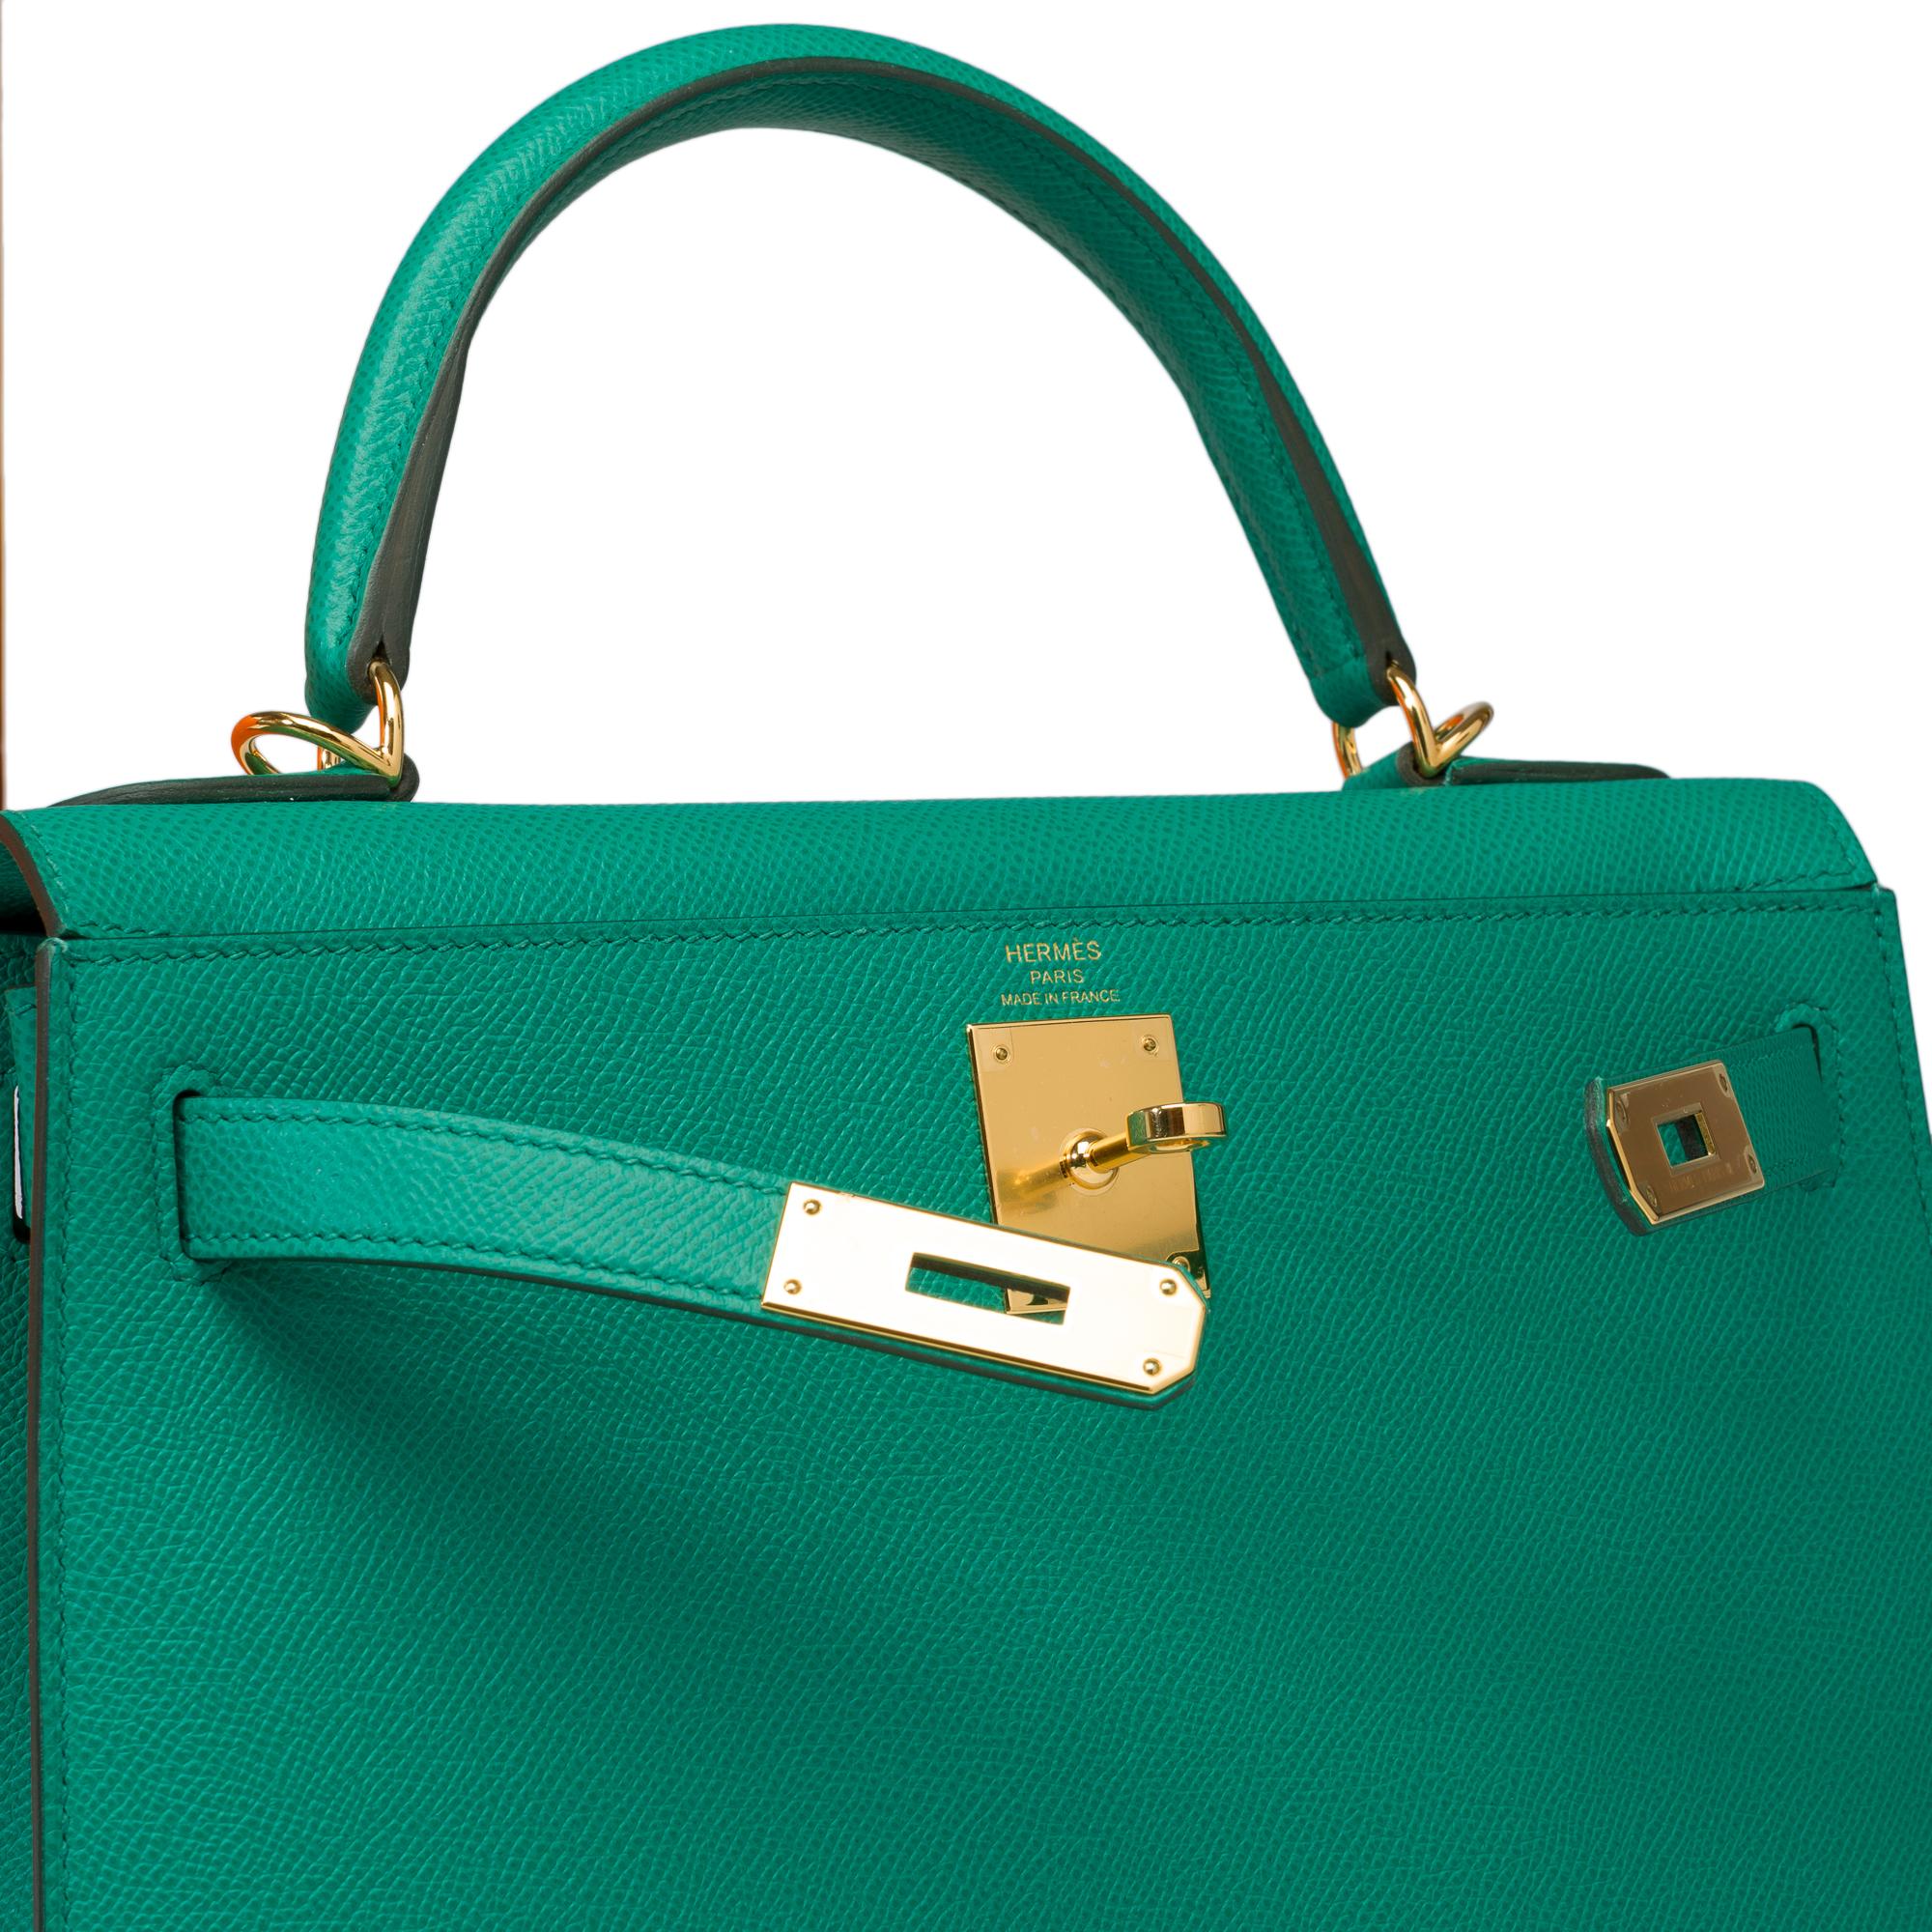 New Hermès Kelly 28 sellier handbag strap in Vert Jade Epsom leather, GHW For Sale 3